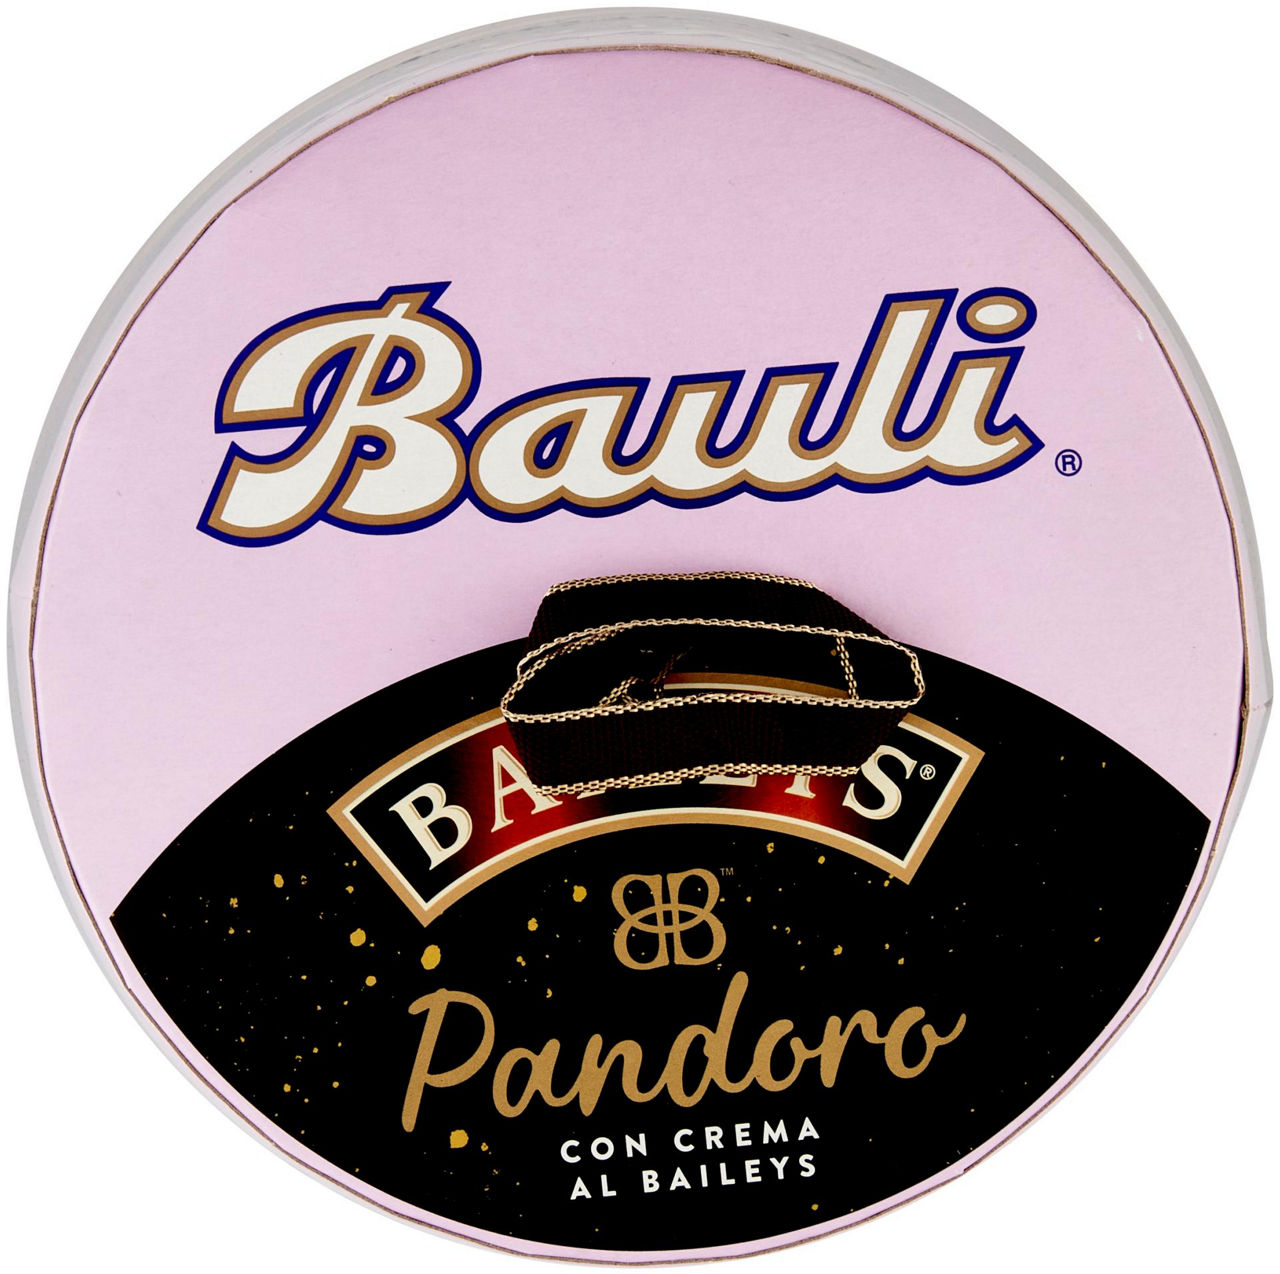 PANDORO BAILEYS BAULI SCATOLA G 750 - 4